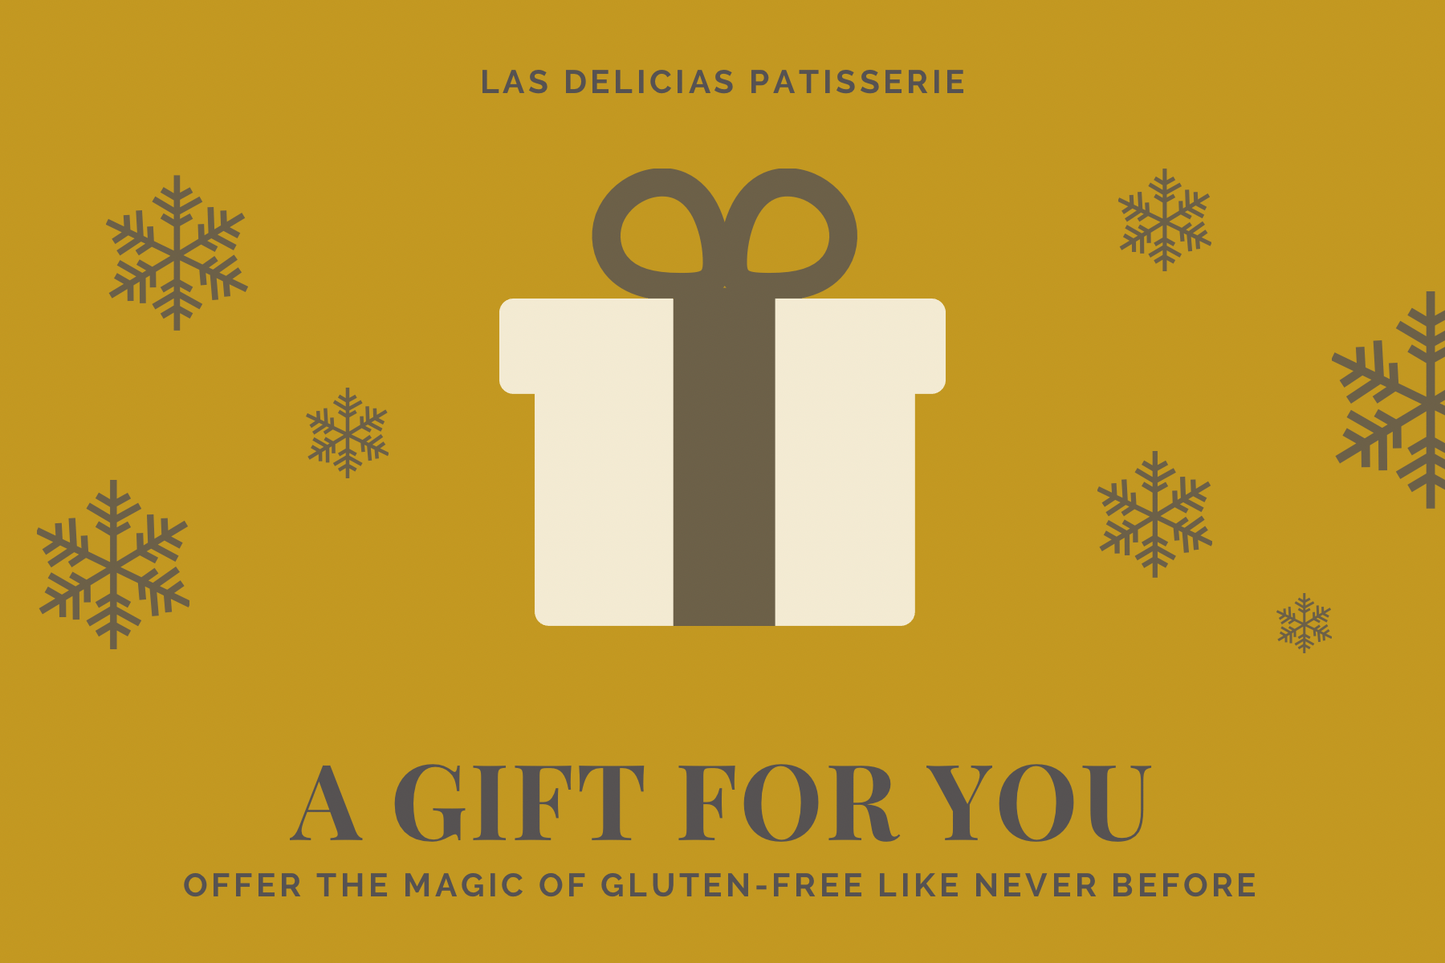 gluten free gift card - las delicias patisserie